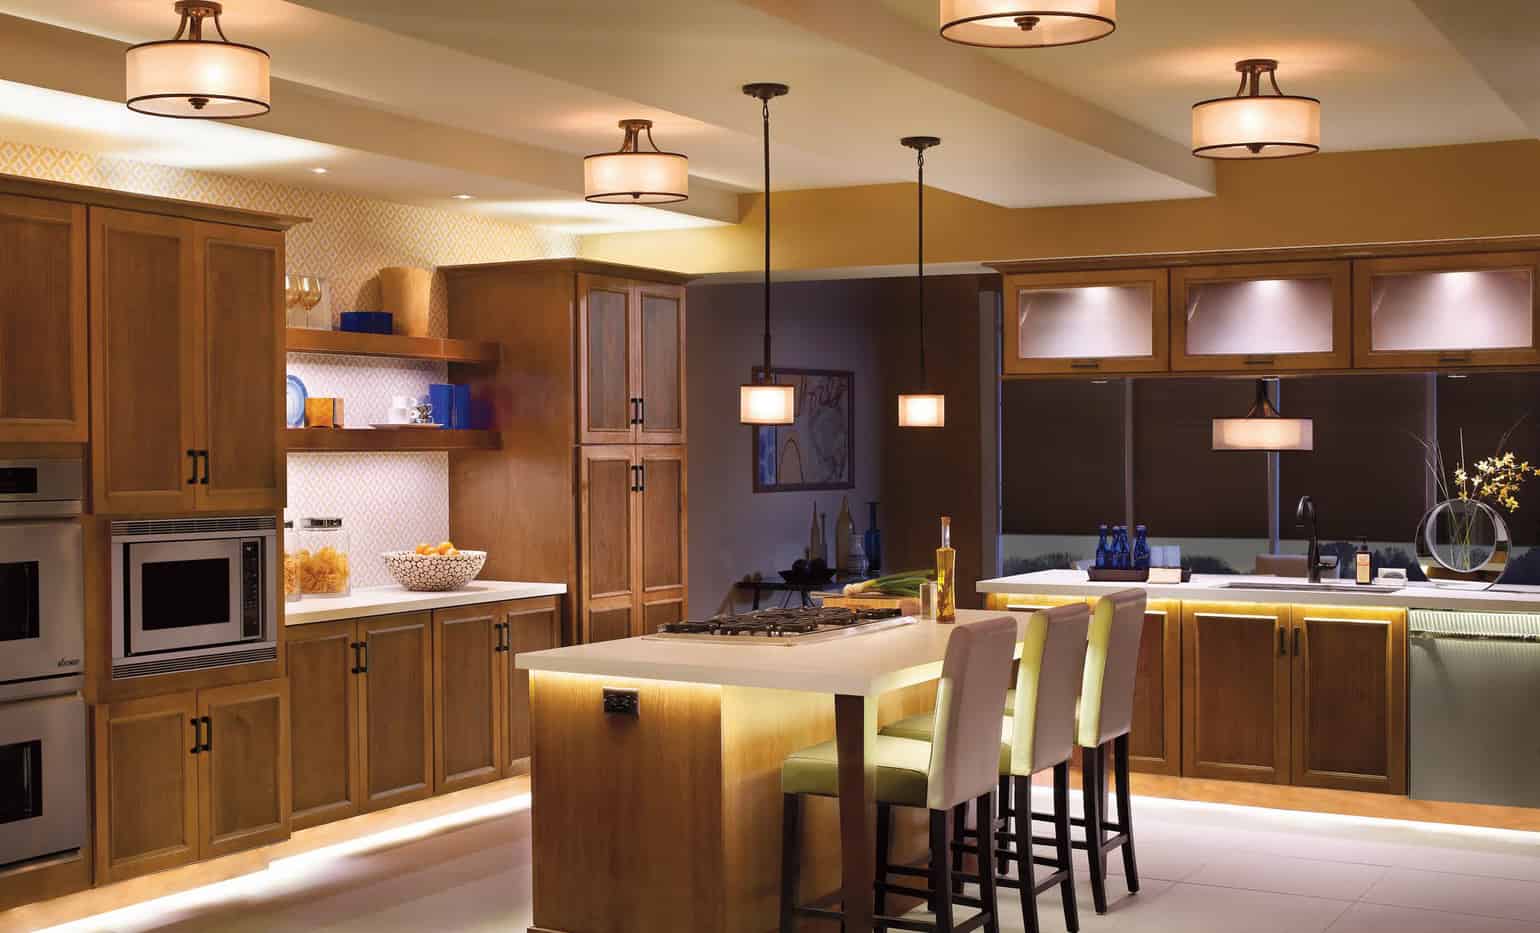 Kitchen Ceiling Lights – The Housing Forum